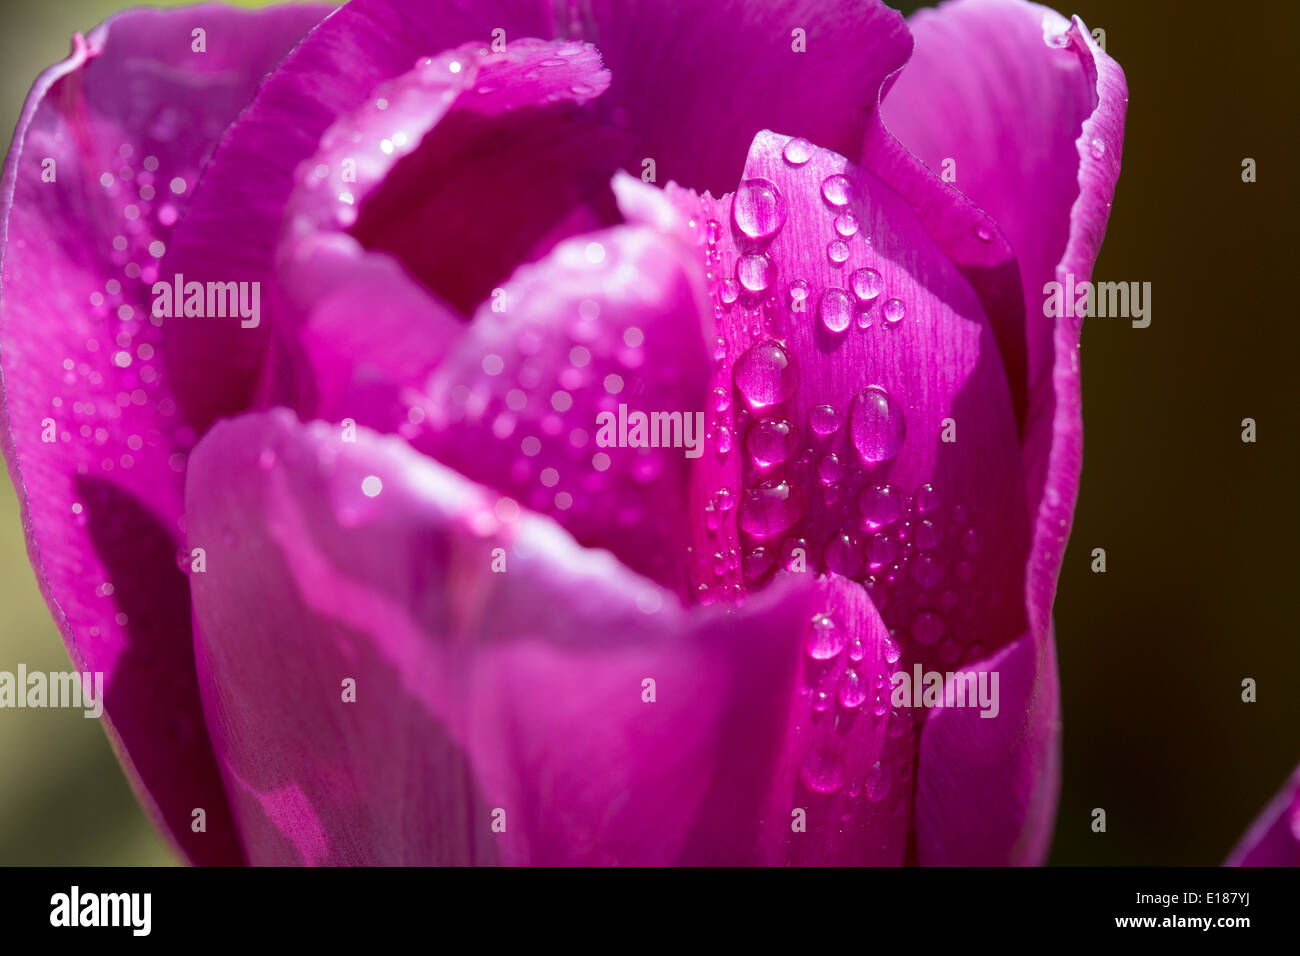 Raindrops on a purple tulip petal. Stock Photo